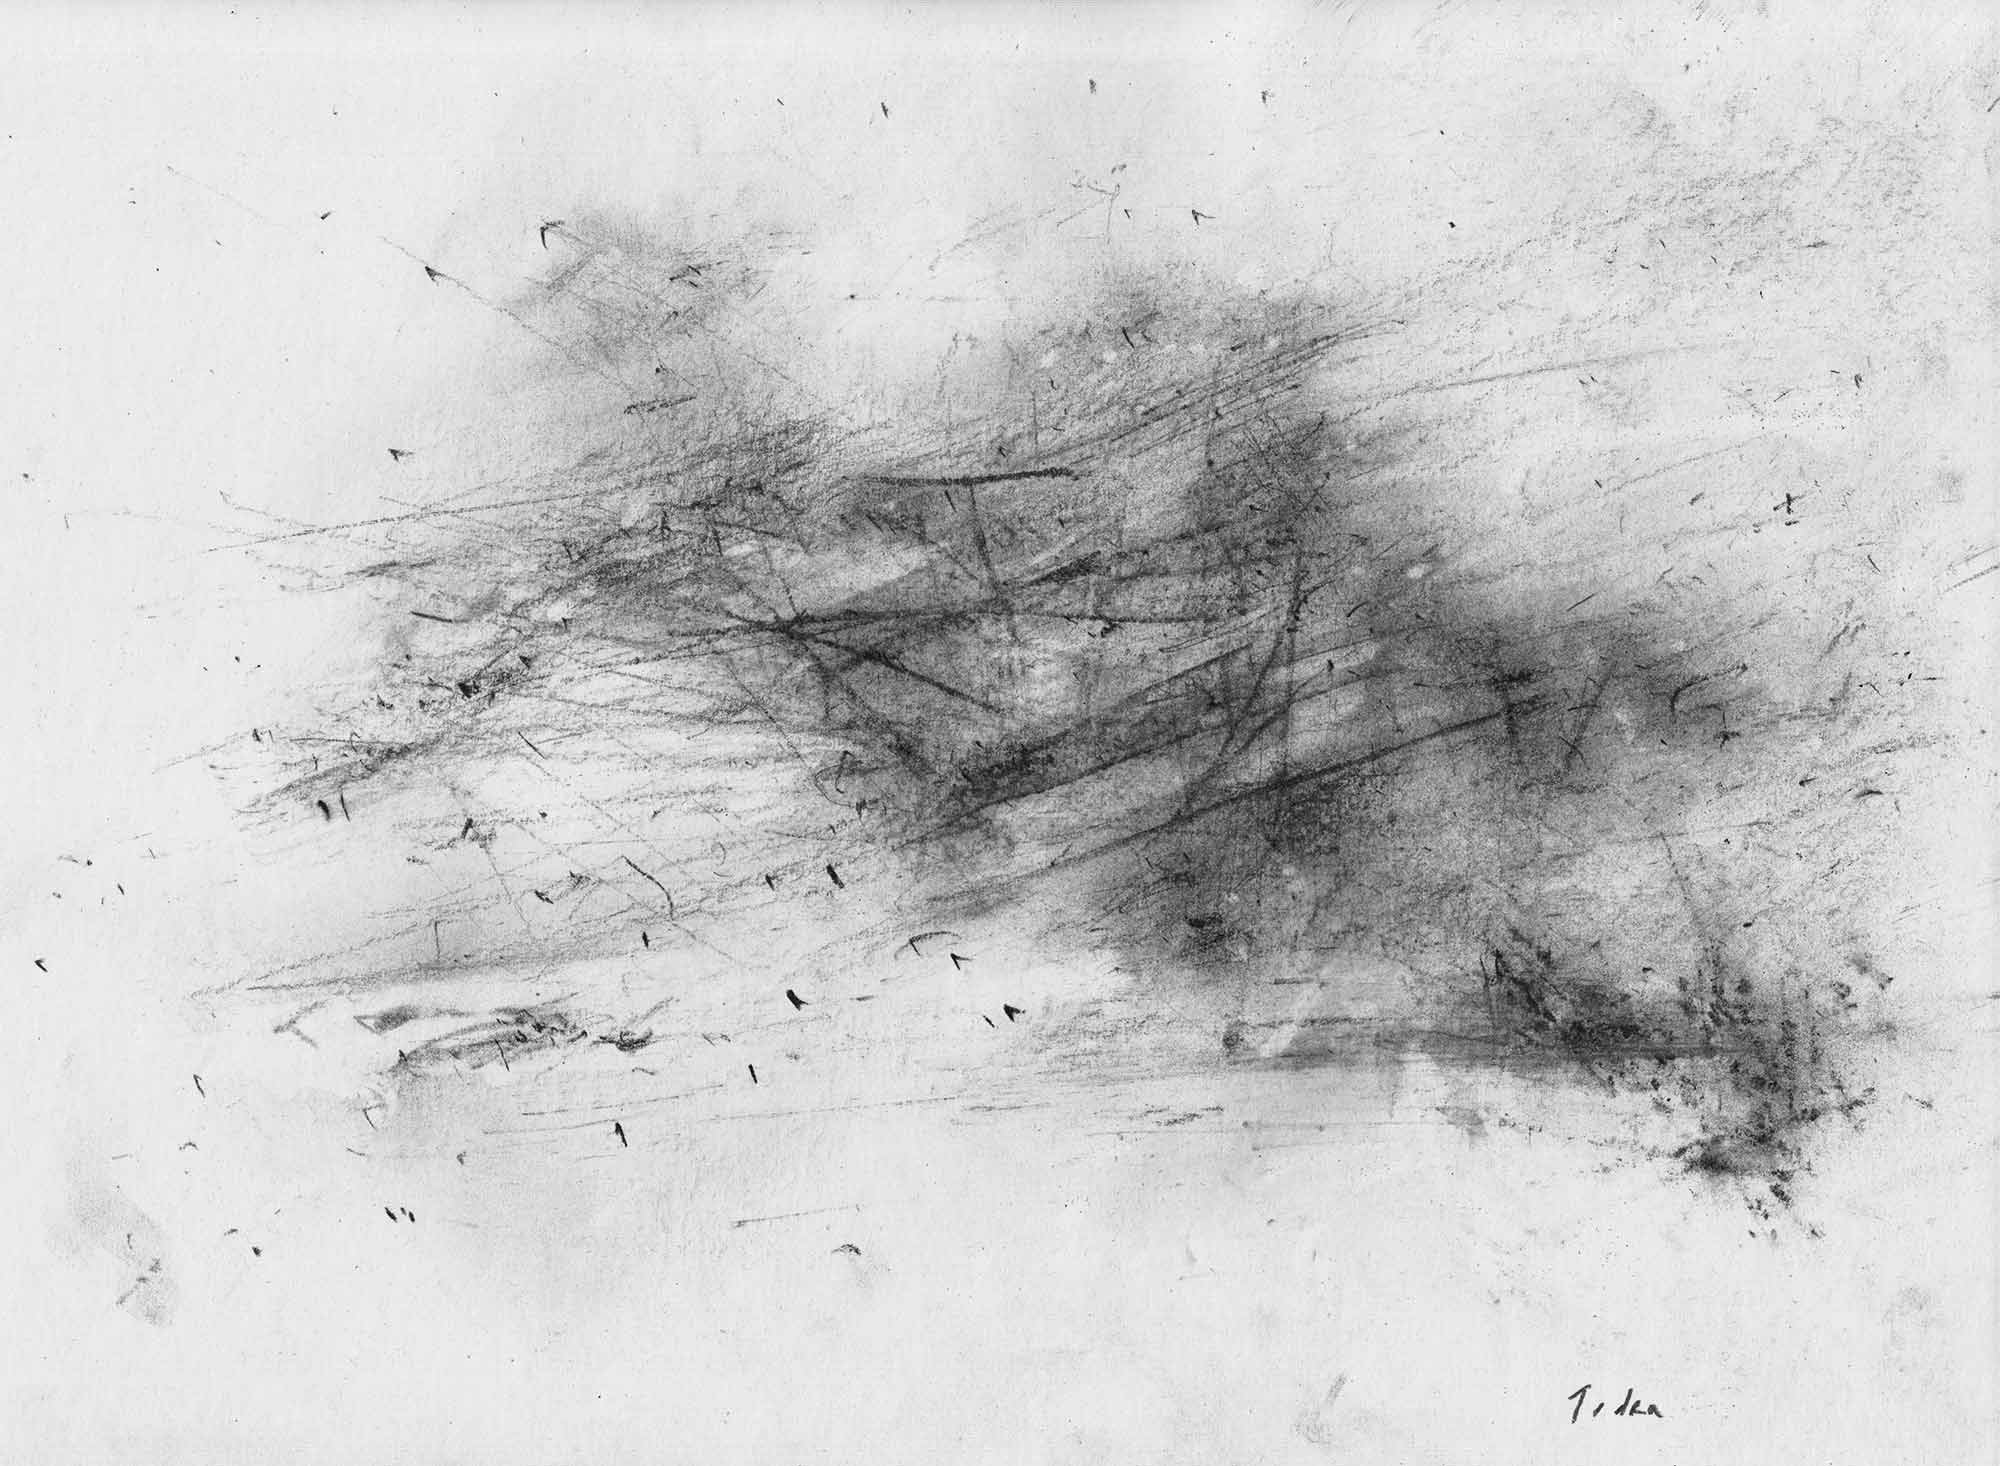 Dying Dog – Original pencil & charcoal drawings - Mario Jodra